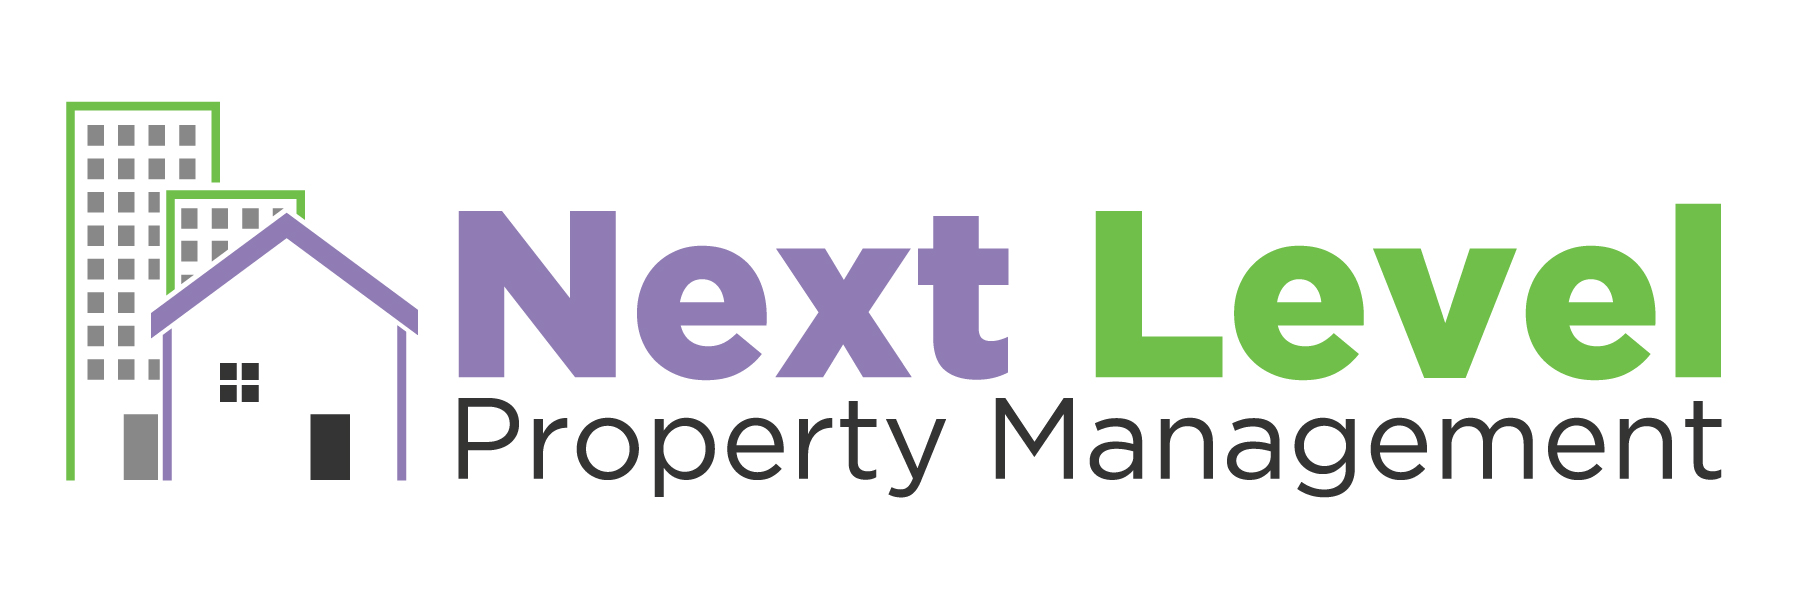 Next Level Property Management – Landlords